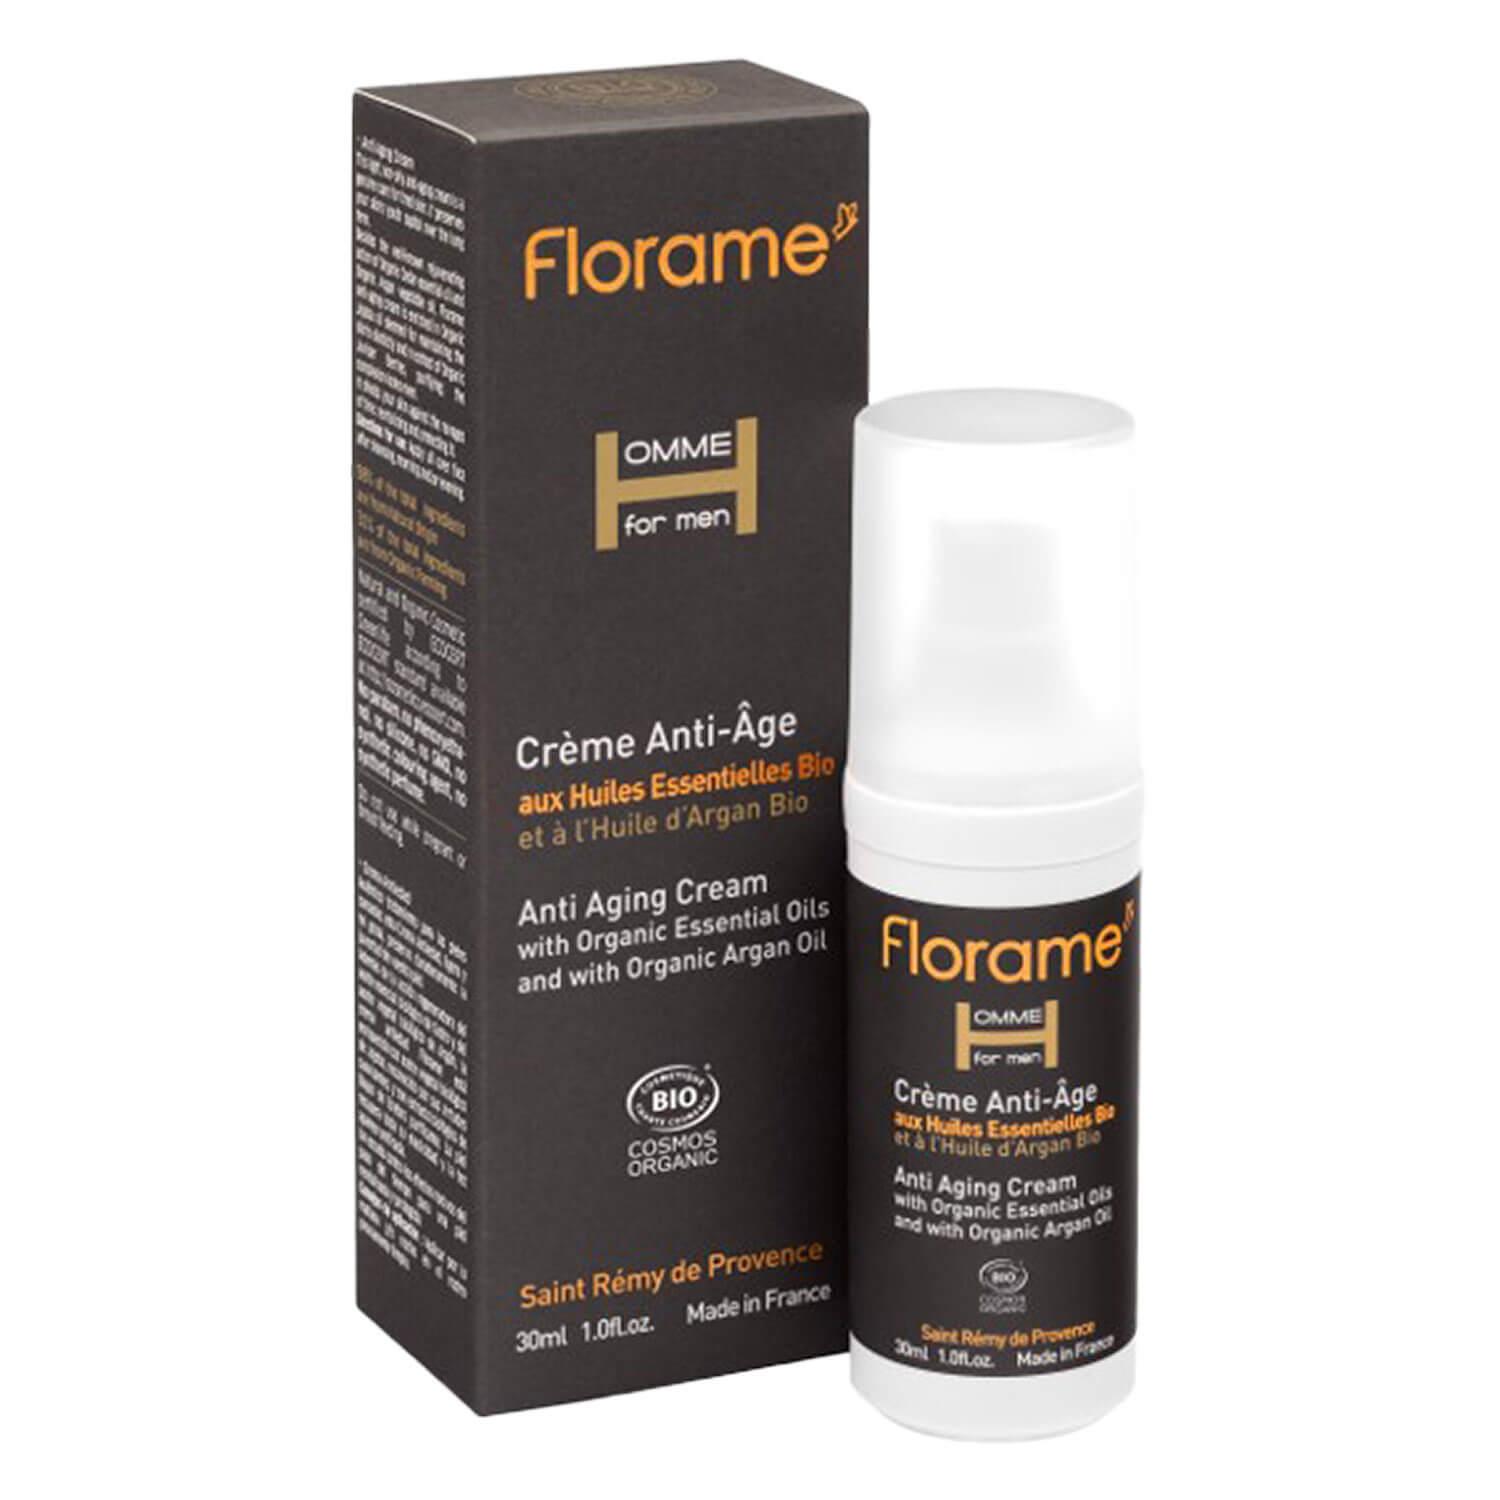 Florame Homme - Anti Aging Cream